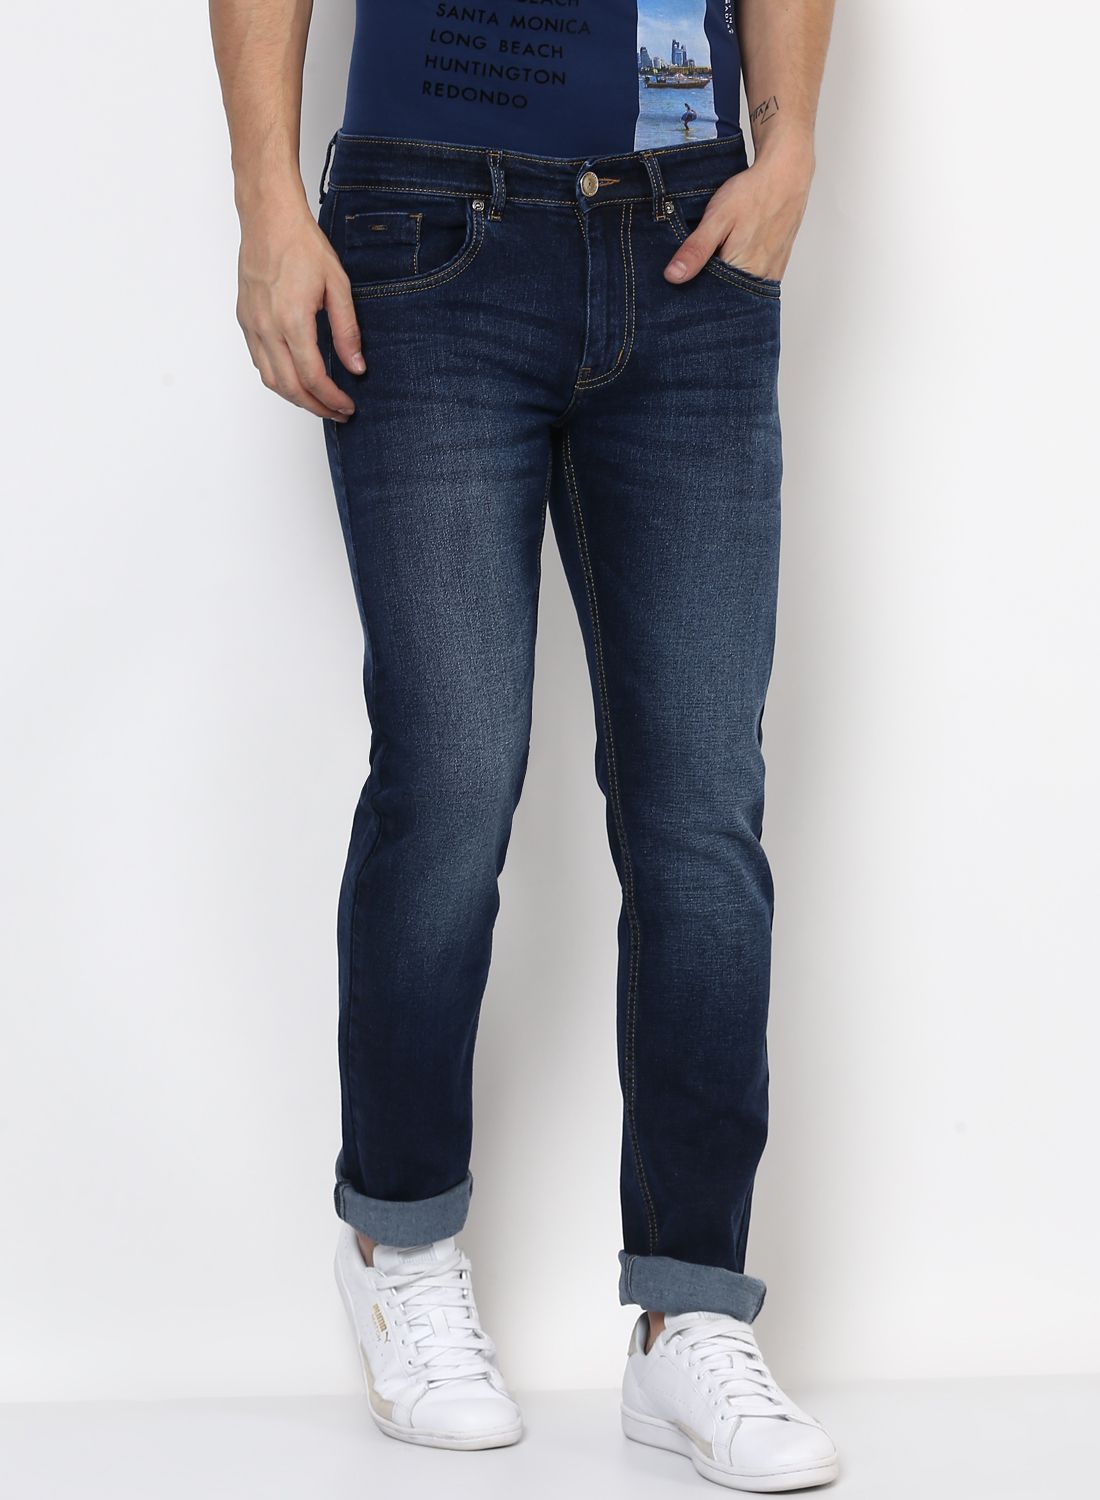 Monte Carlo Blue Slim Jeans - Buy Monte Carlo Blue Slim Jeans Online at ...